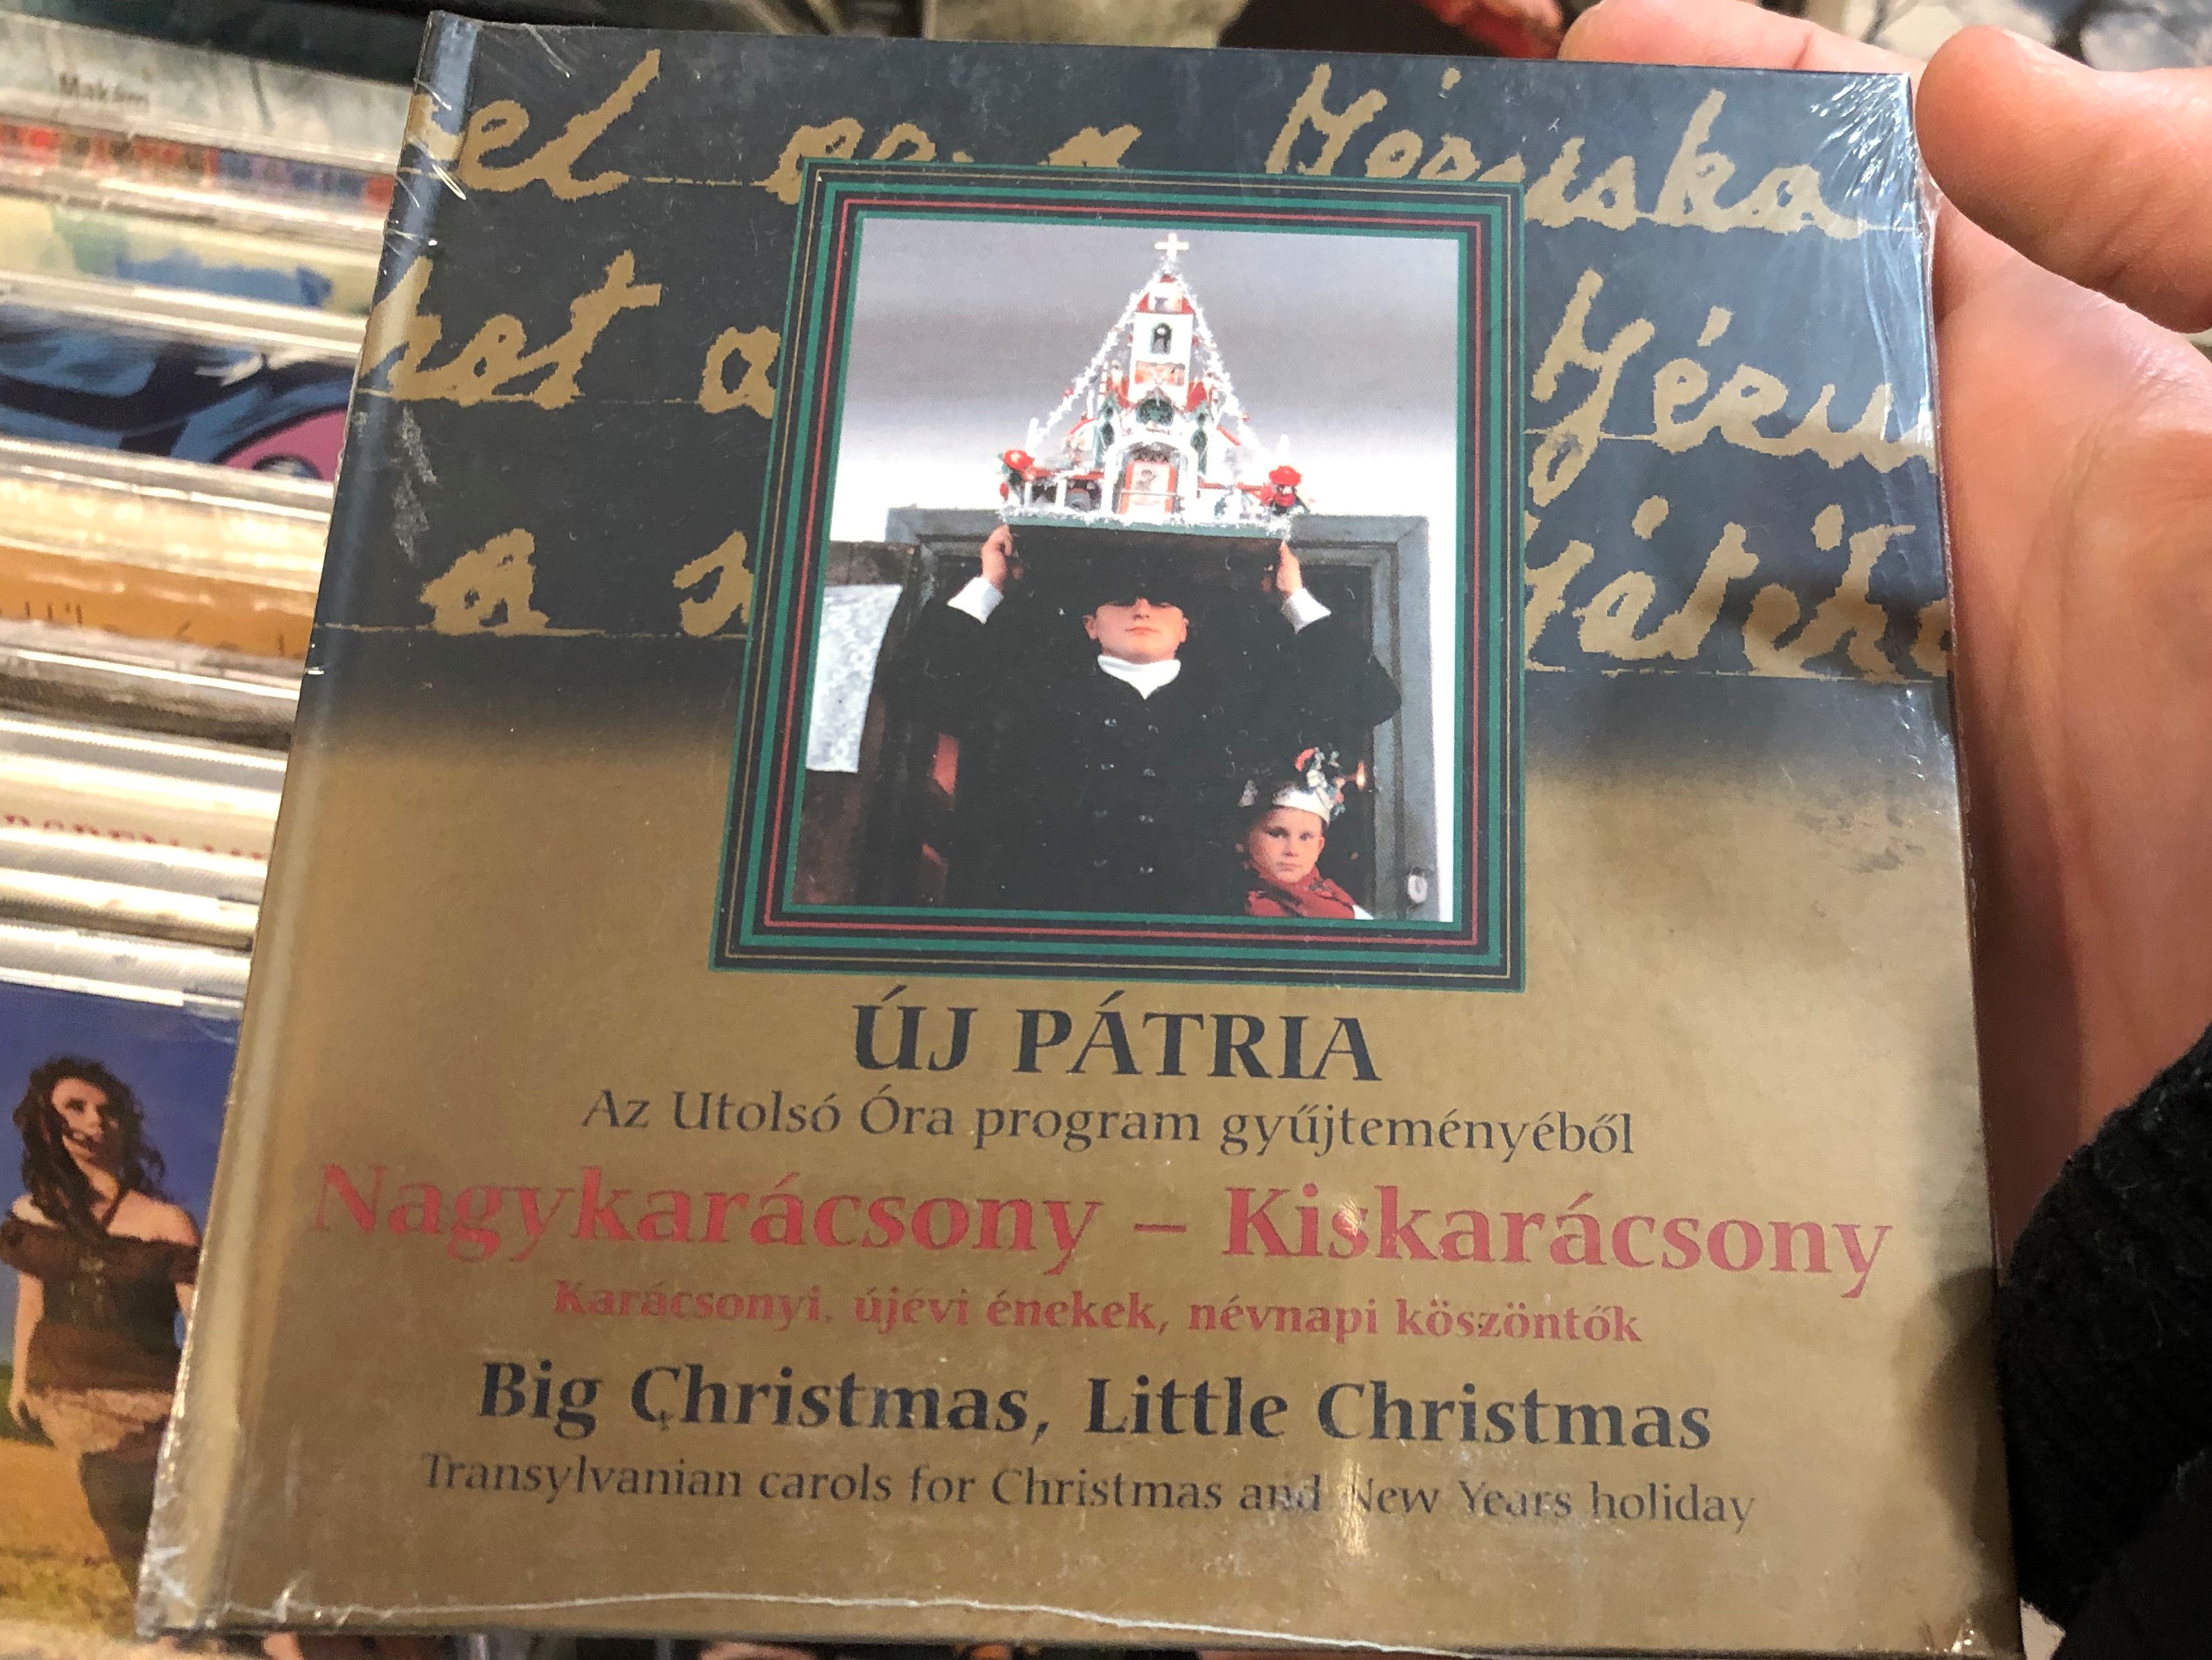 -j-p-tria-az-utols-ra-gy-jtem-ny-b-l-nagykar-csony-kiskar-csony-big-christmas-little-christmas-transylvanian-carols-for-christmas-and-new-years-holiday-fon-records-audio-cd-1999-fa-109-1-.jpg